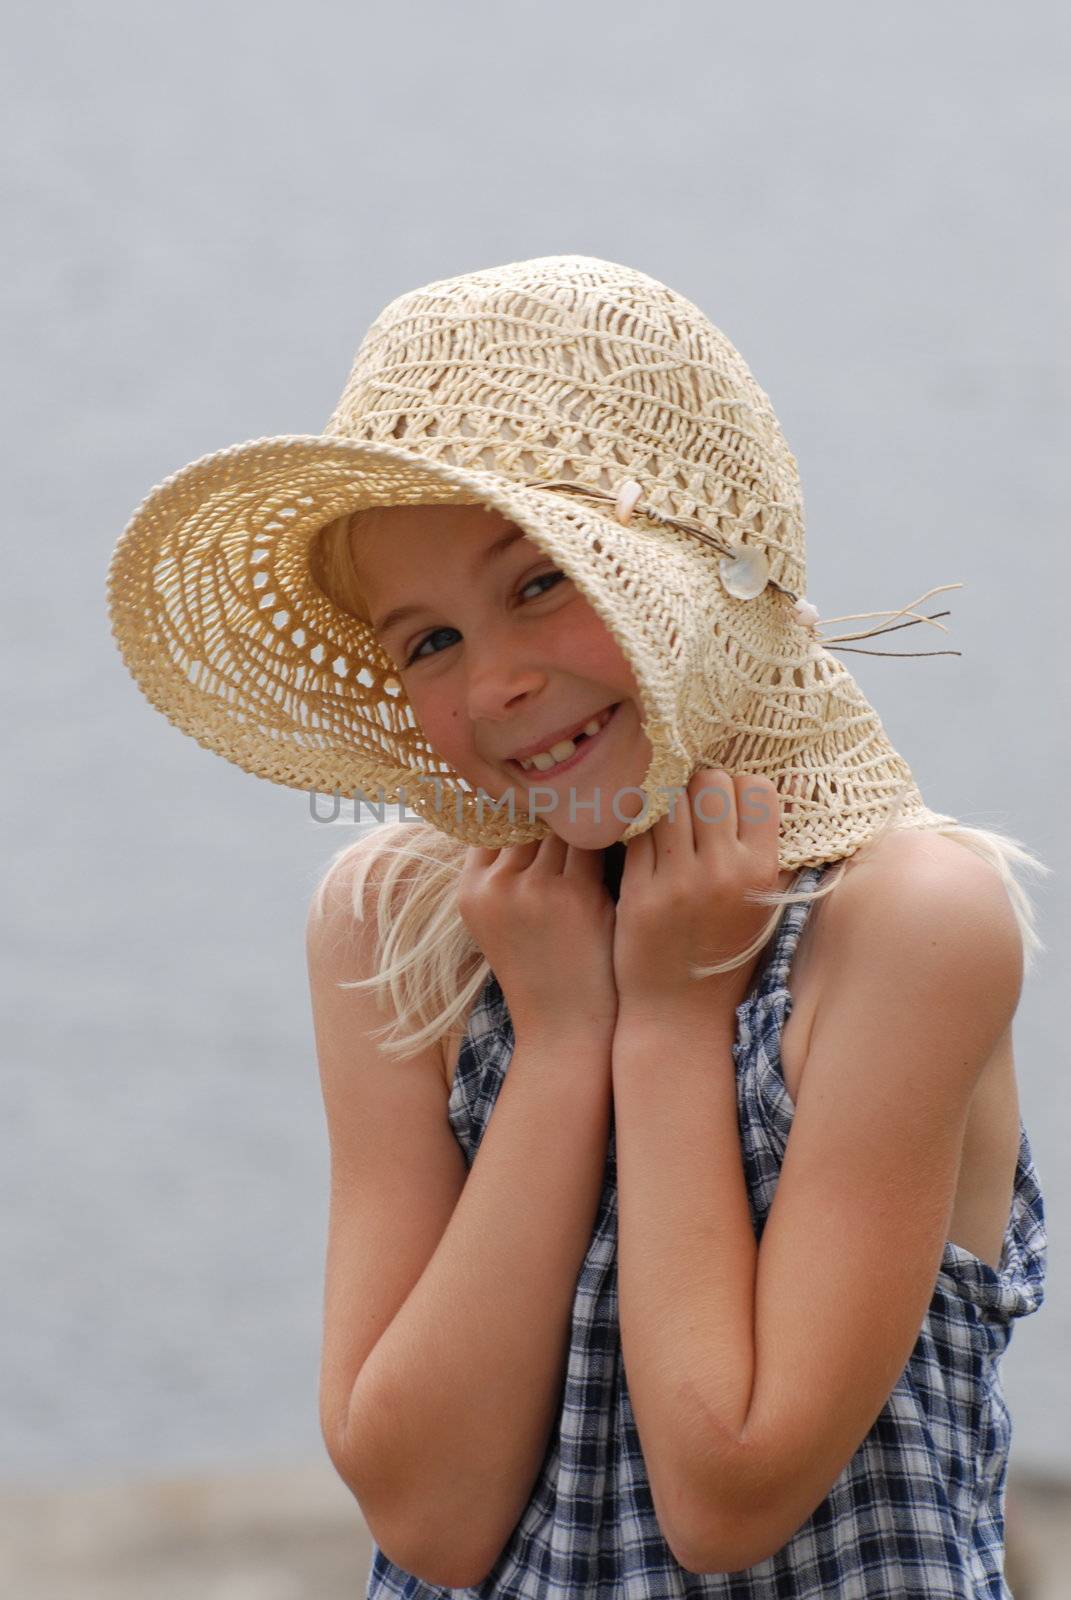 Smiling girl with straw hat by Bildehagen